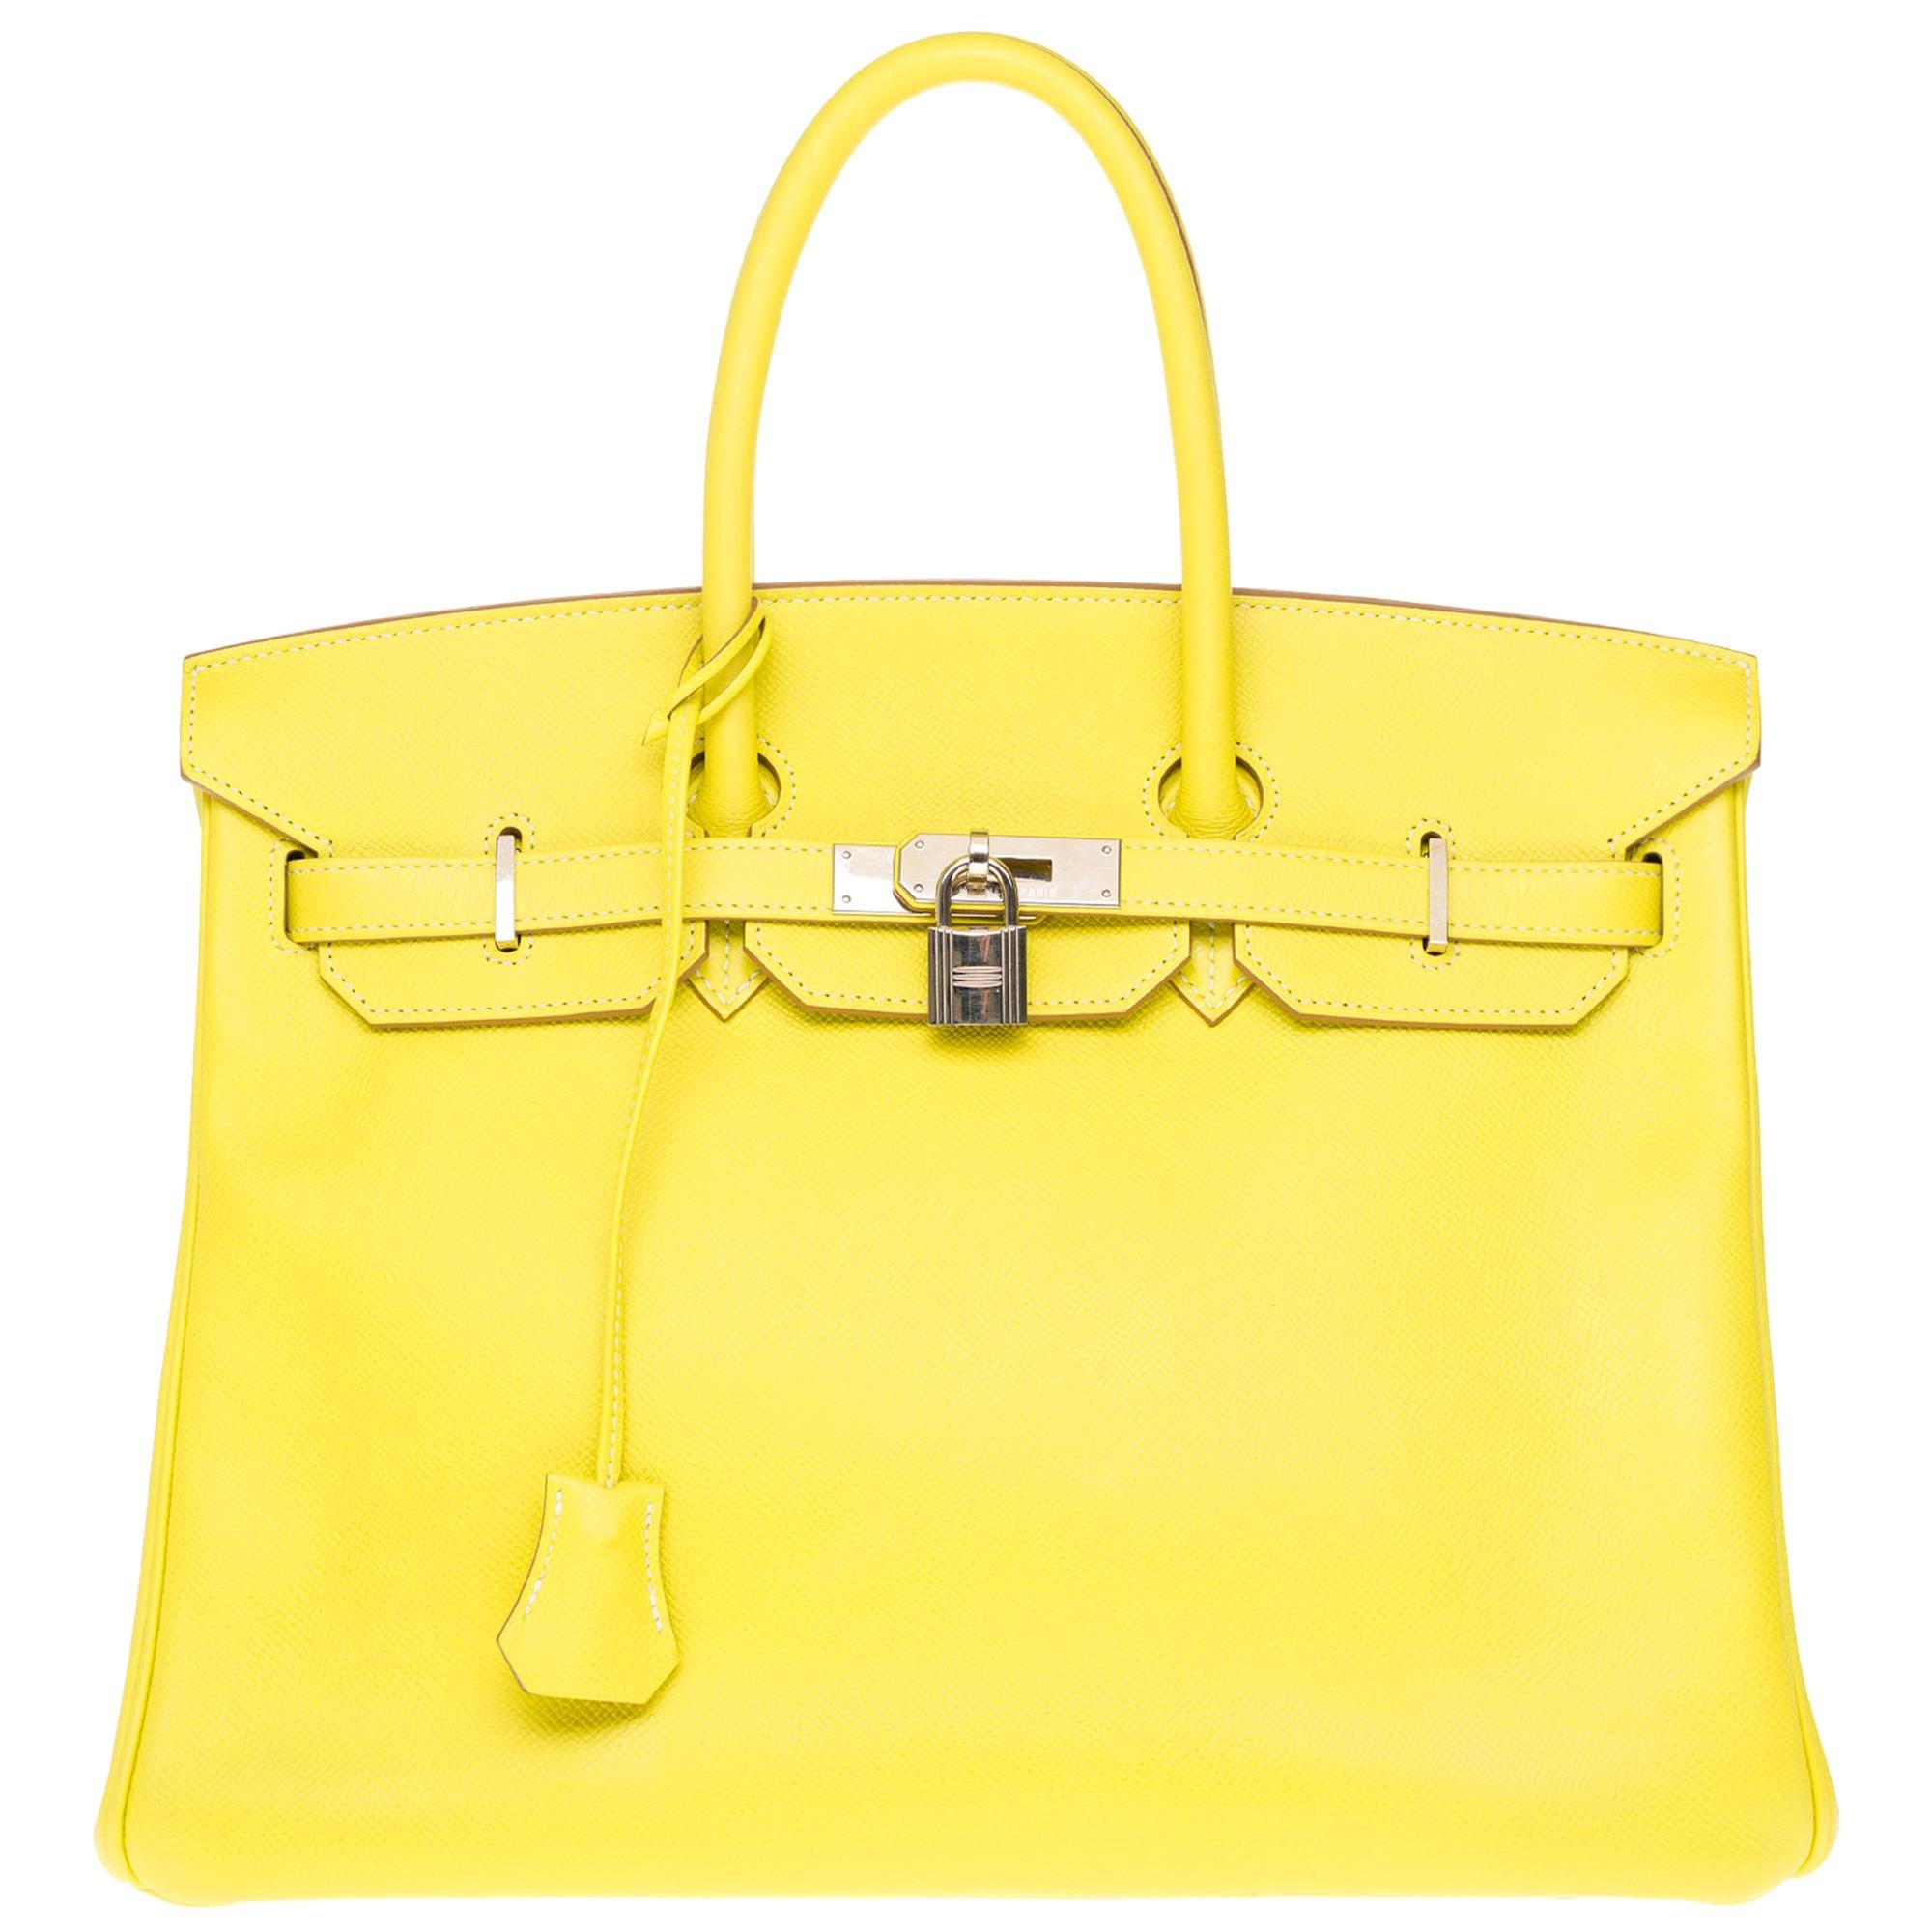 Hermès Birkin 35 handbag in yellow epsom leather & grey interior with PHW !